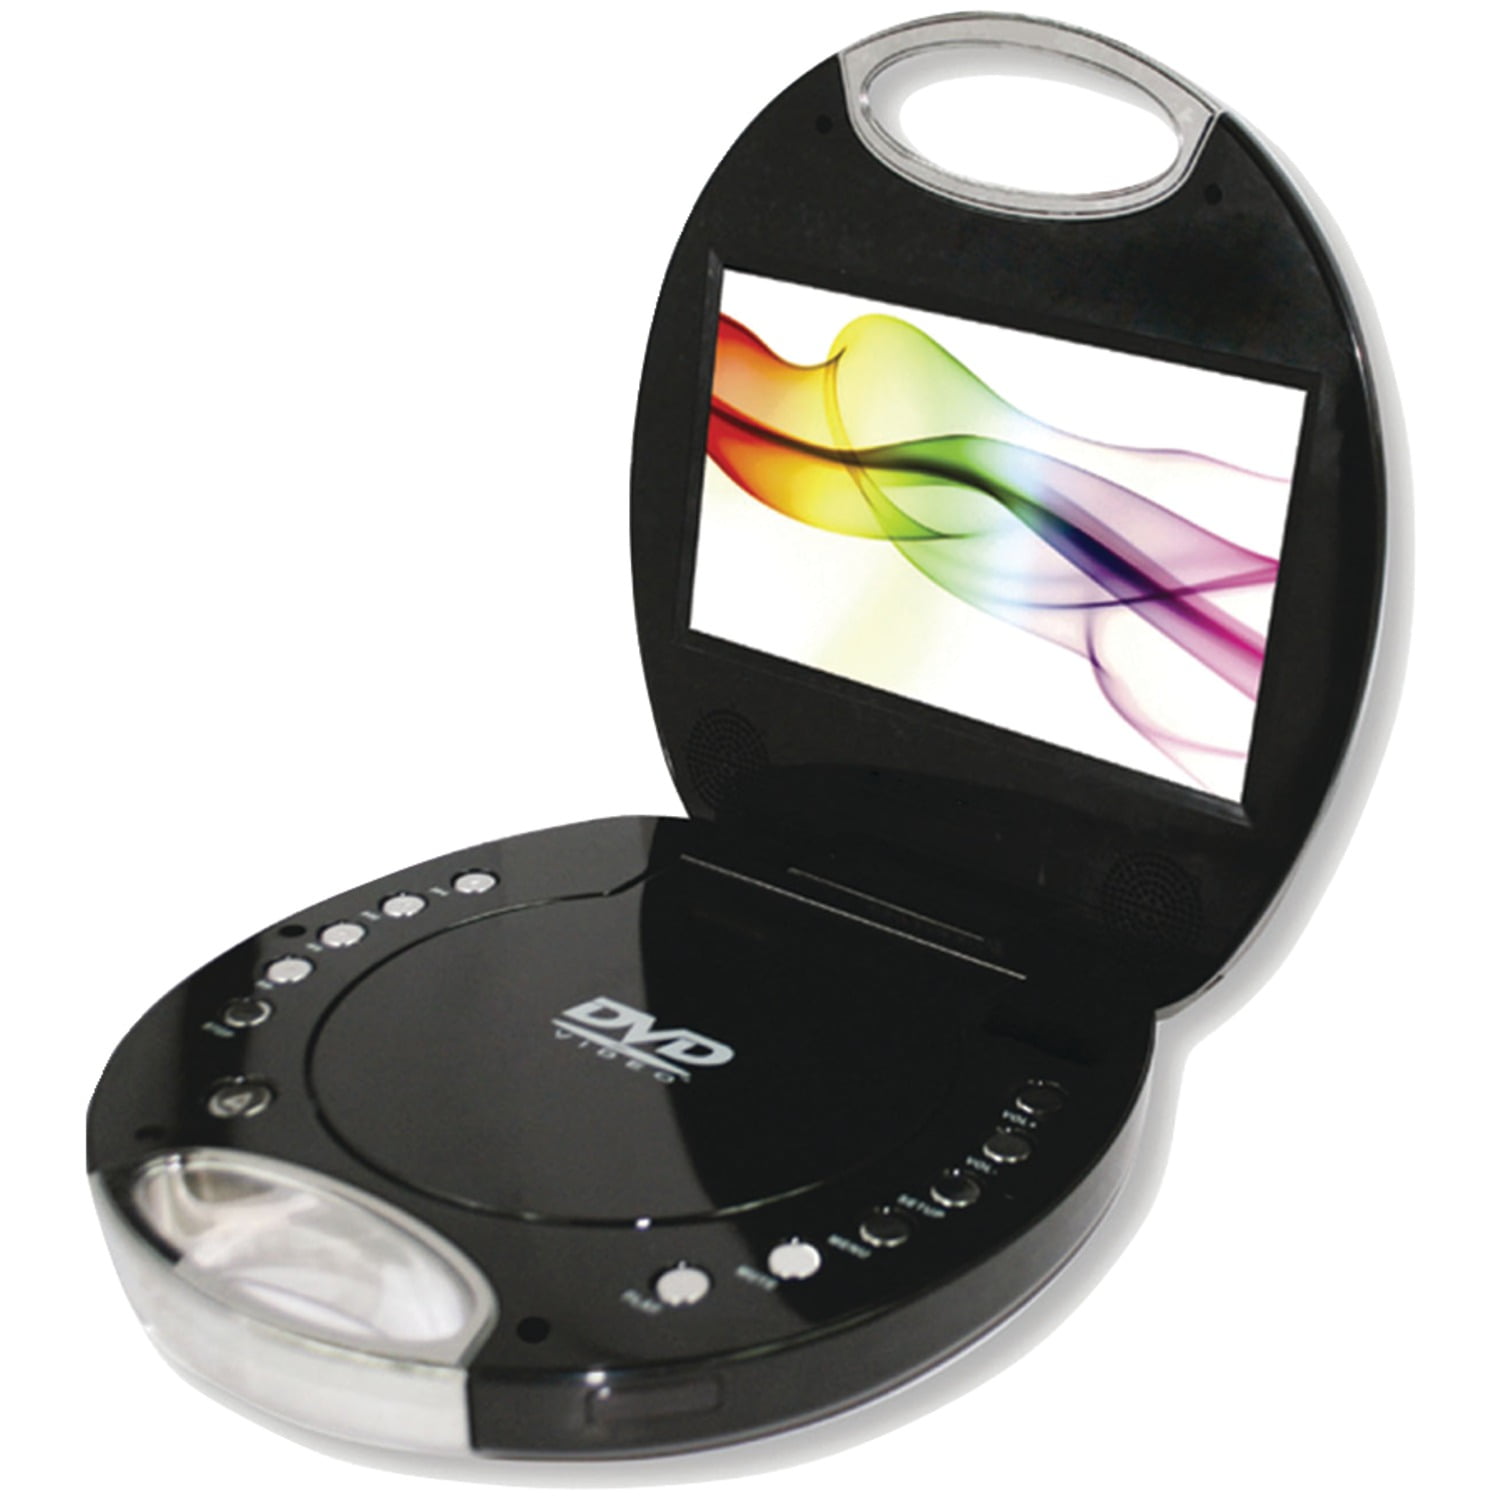 Sylvania 7 Portable Dvd Player With Integrated Handle Sdvd7046 Black